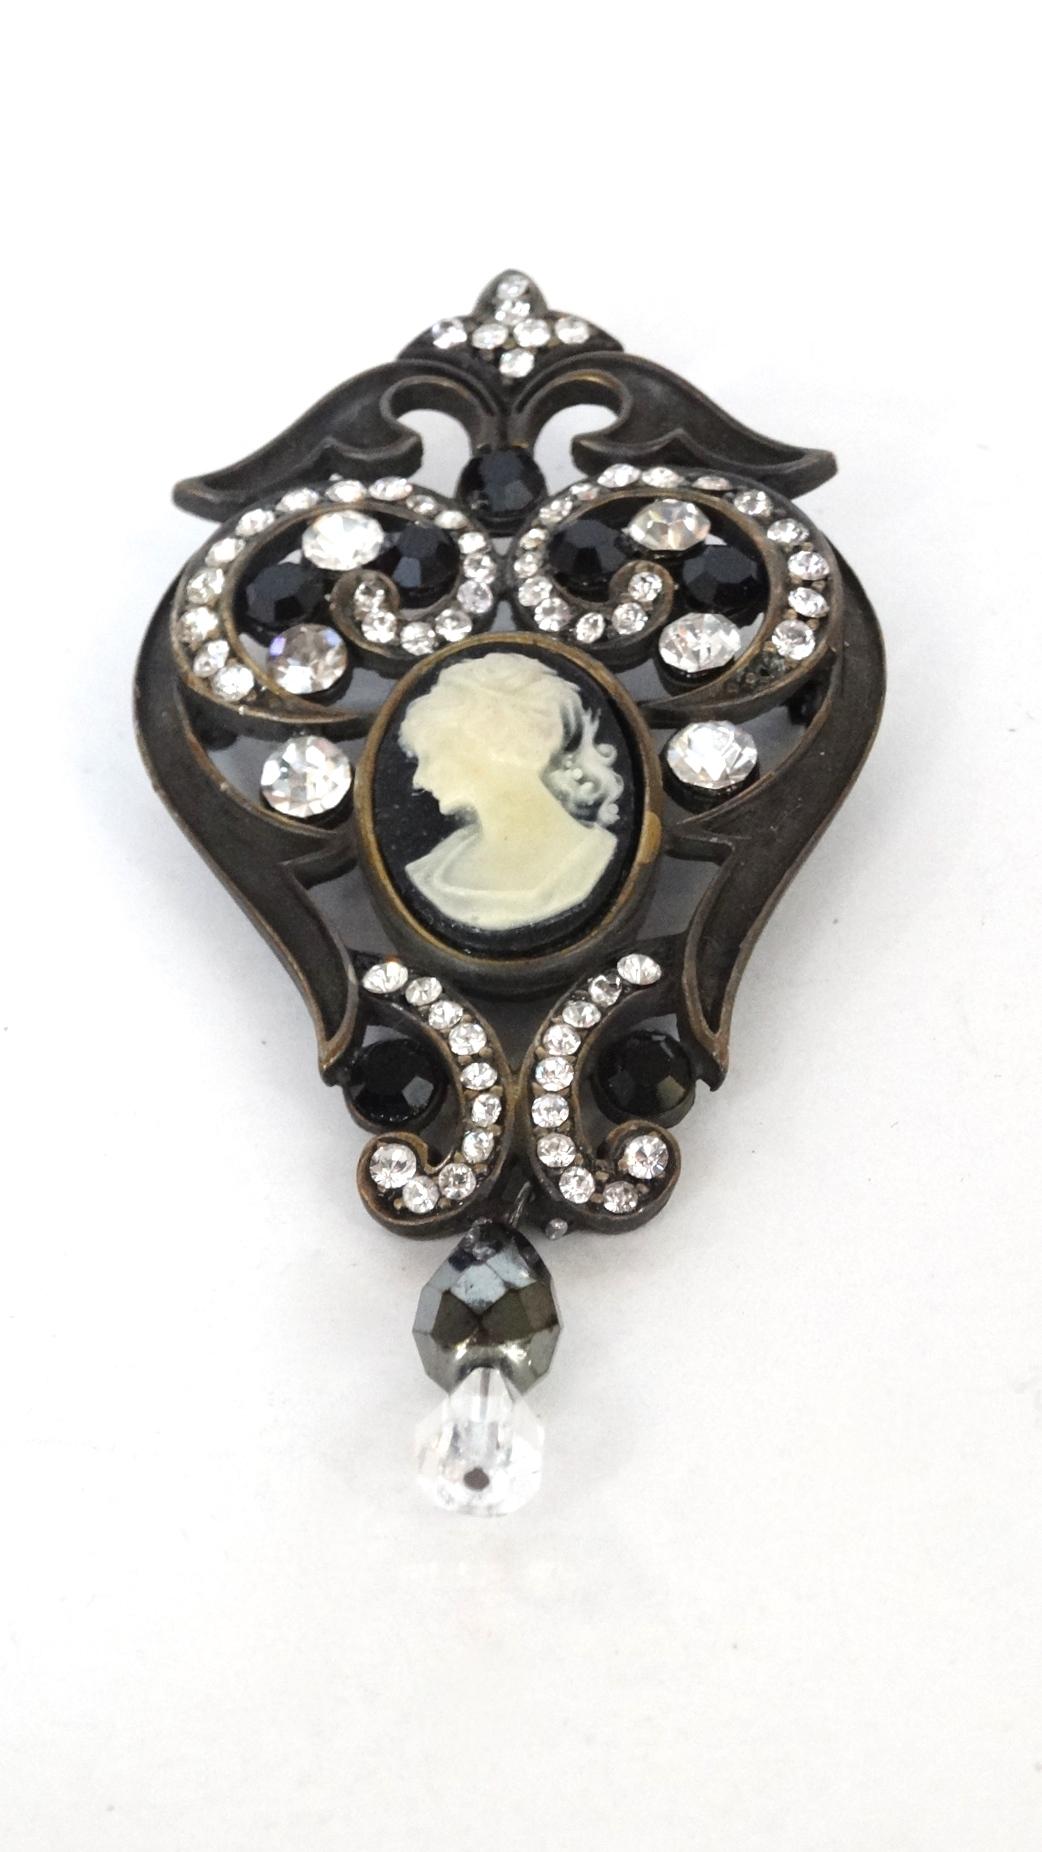  Crystal Encrusted Victorian Style Brooch  1